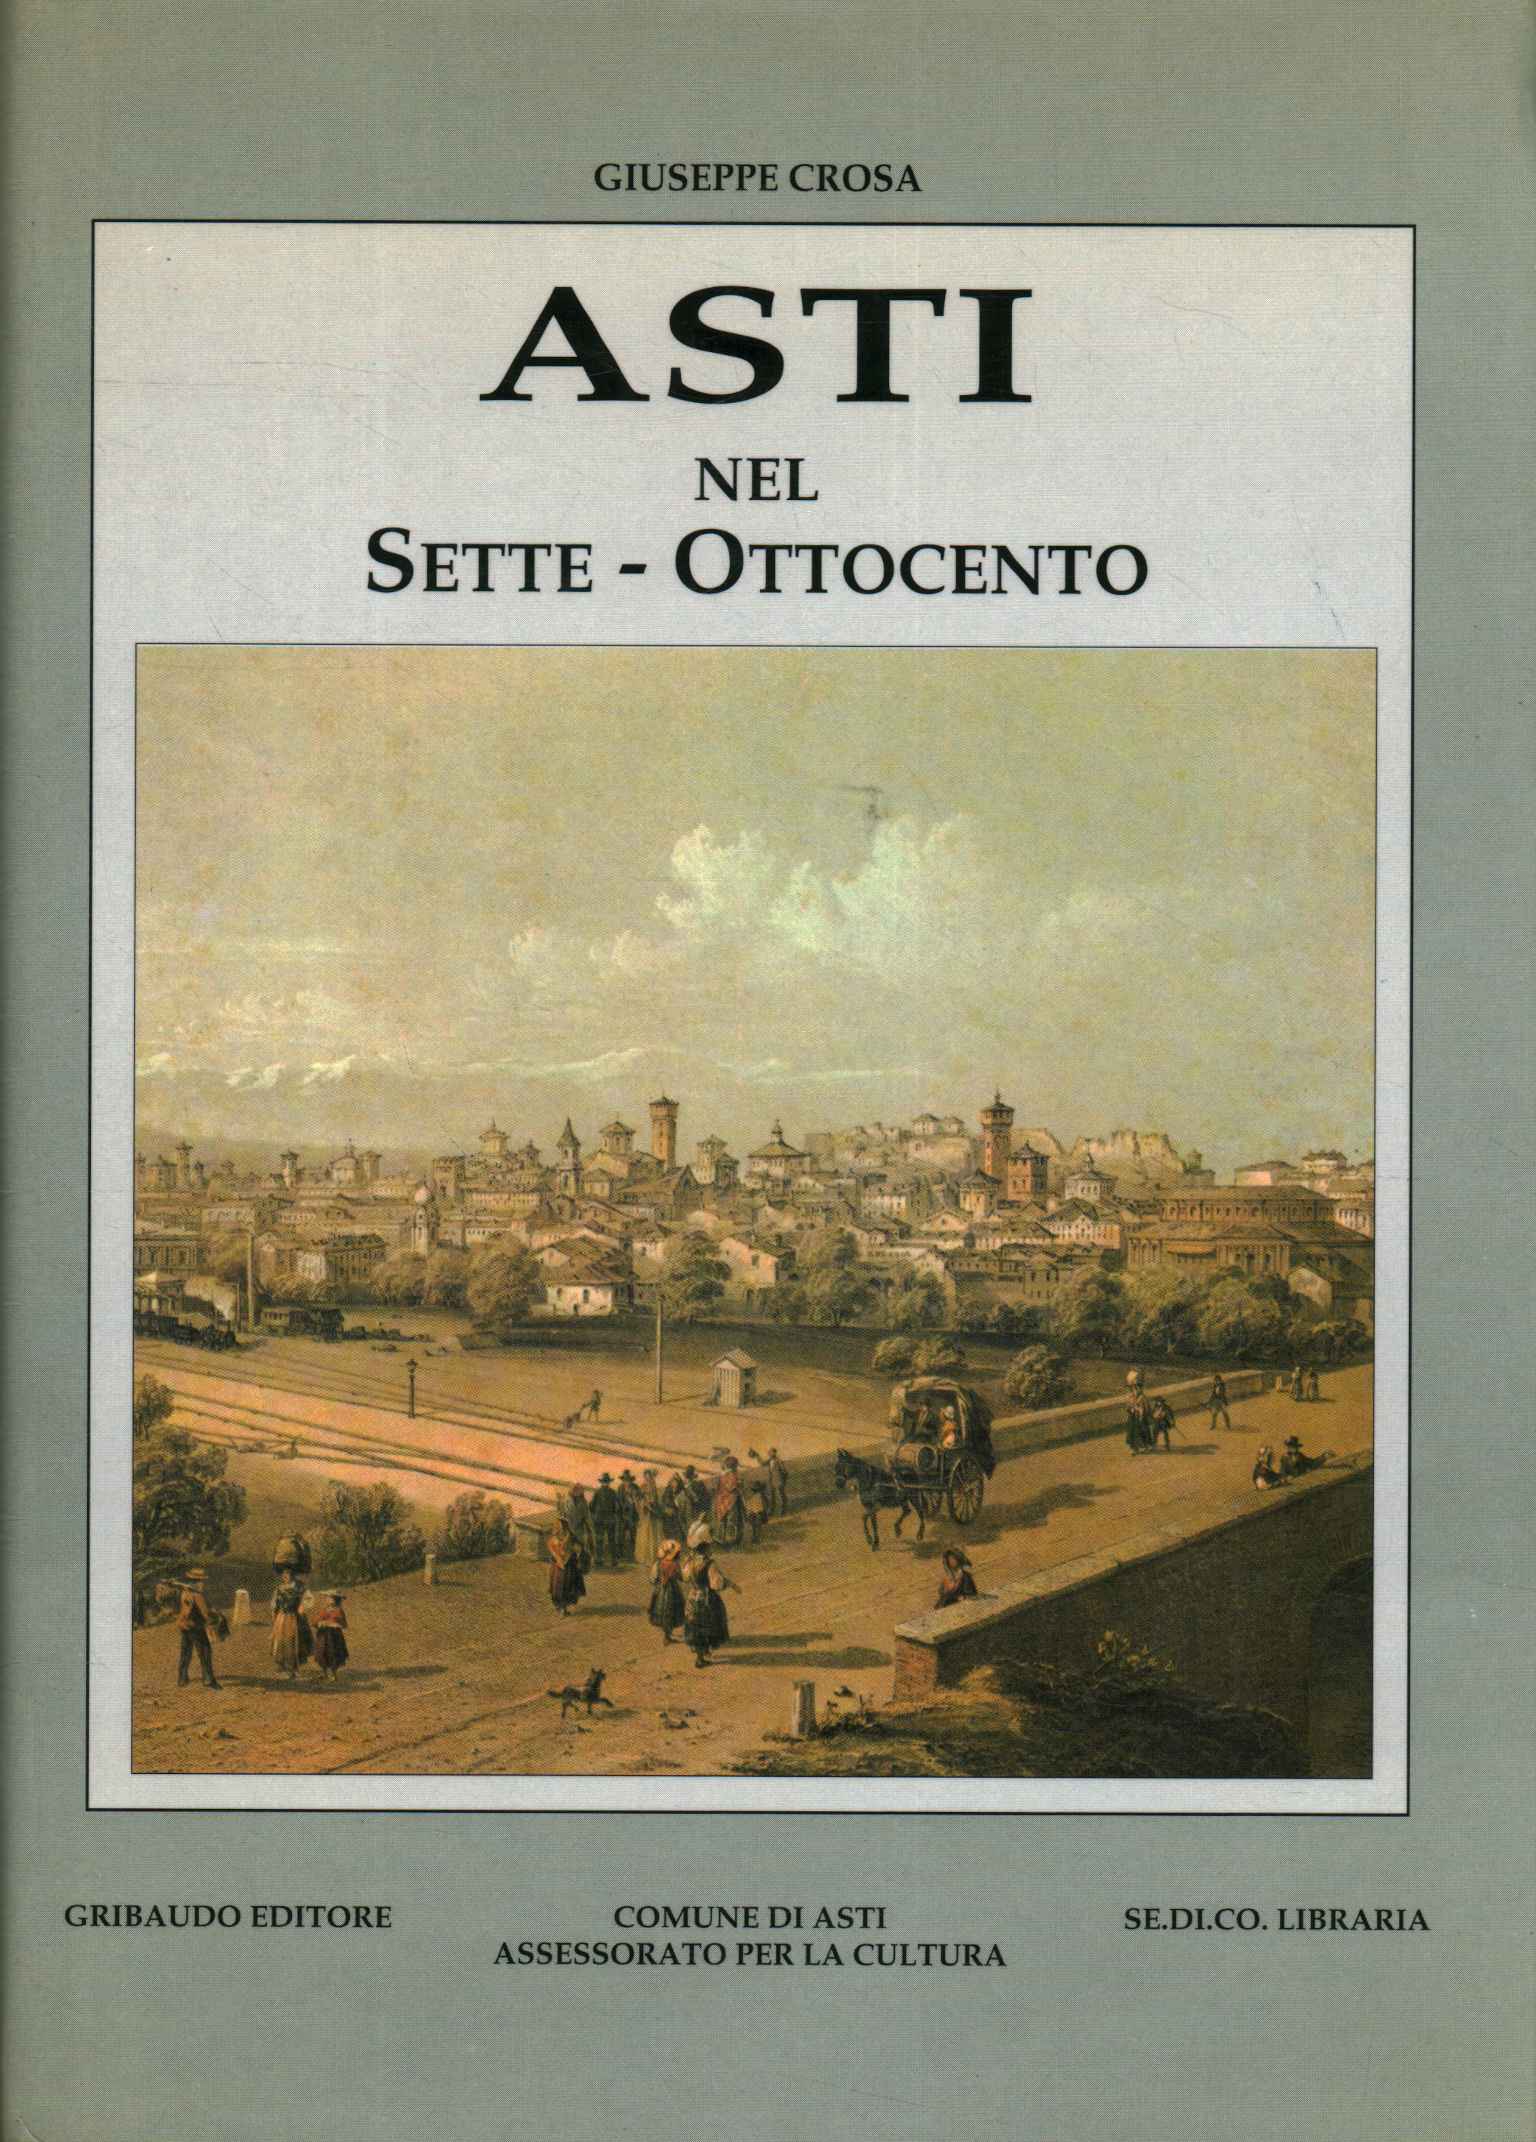 Asti in the eighteenth - nineteenth centuries